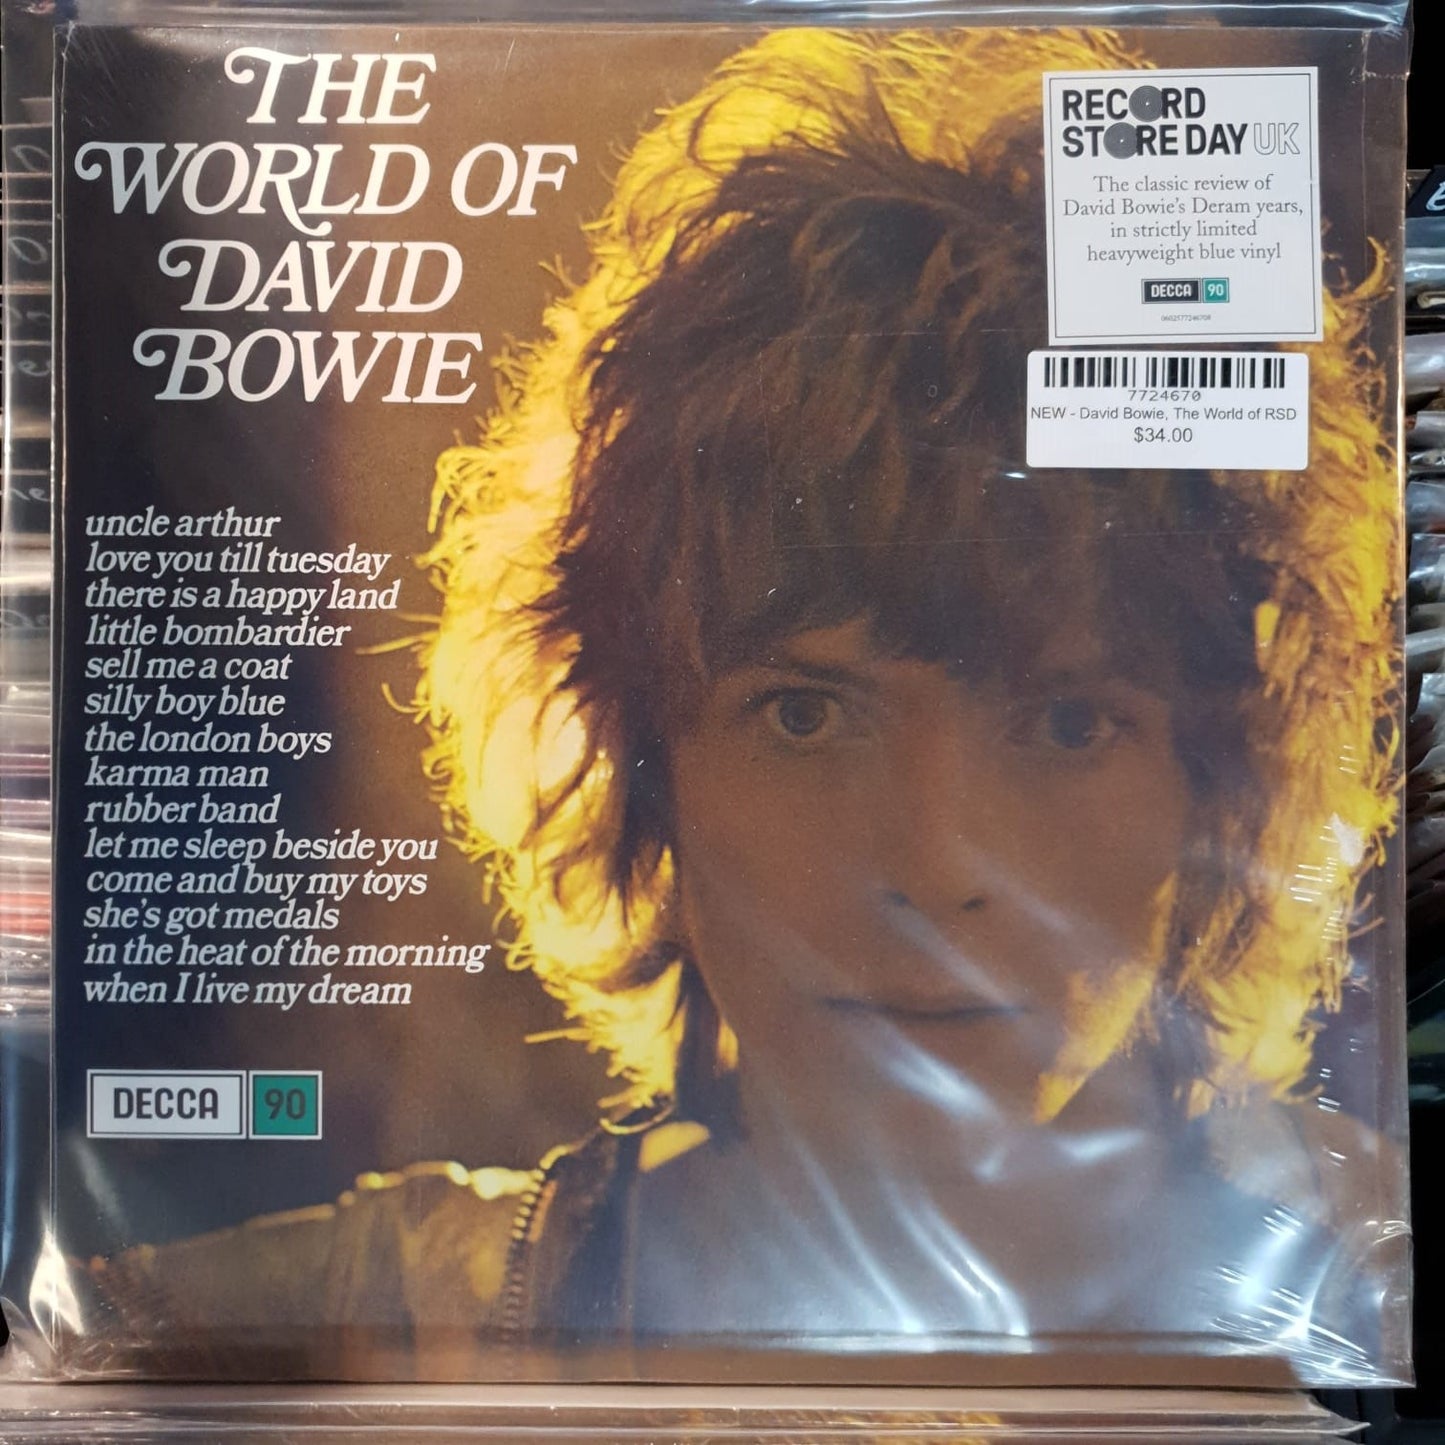 NEW - David Bowie, The World of David Bowie Blue Vinyl